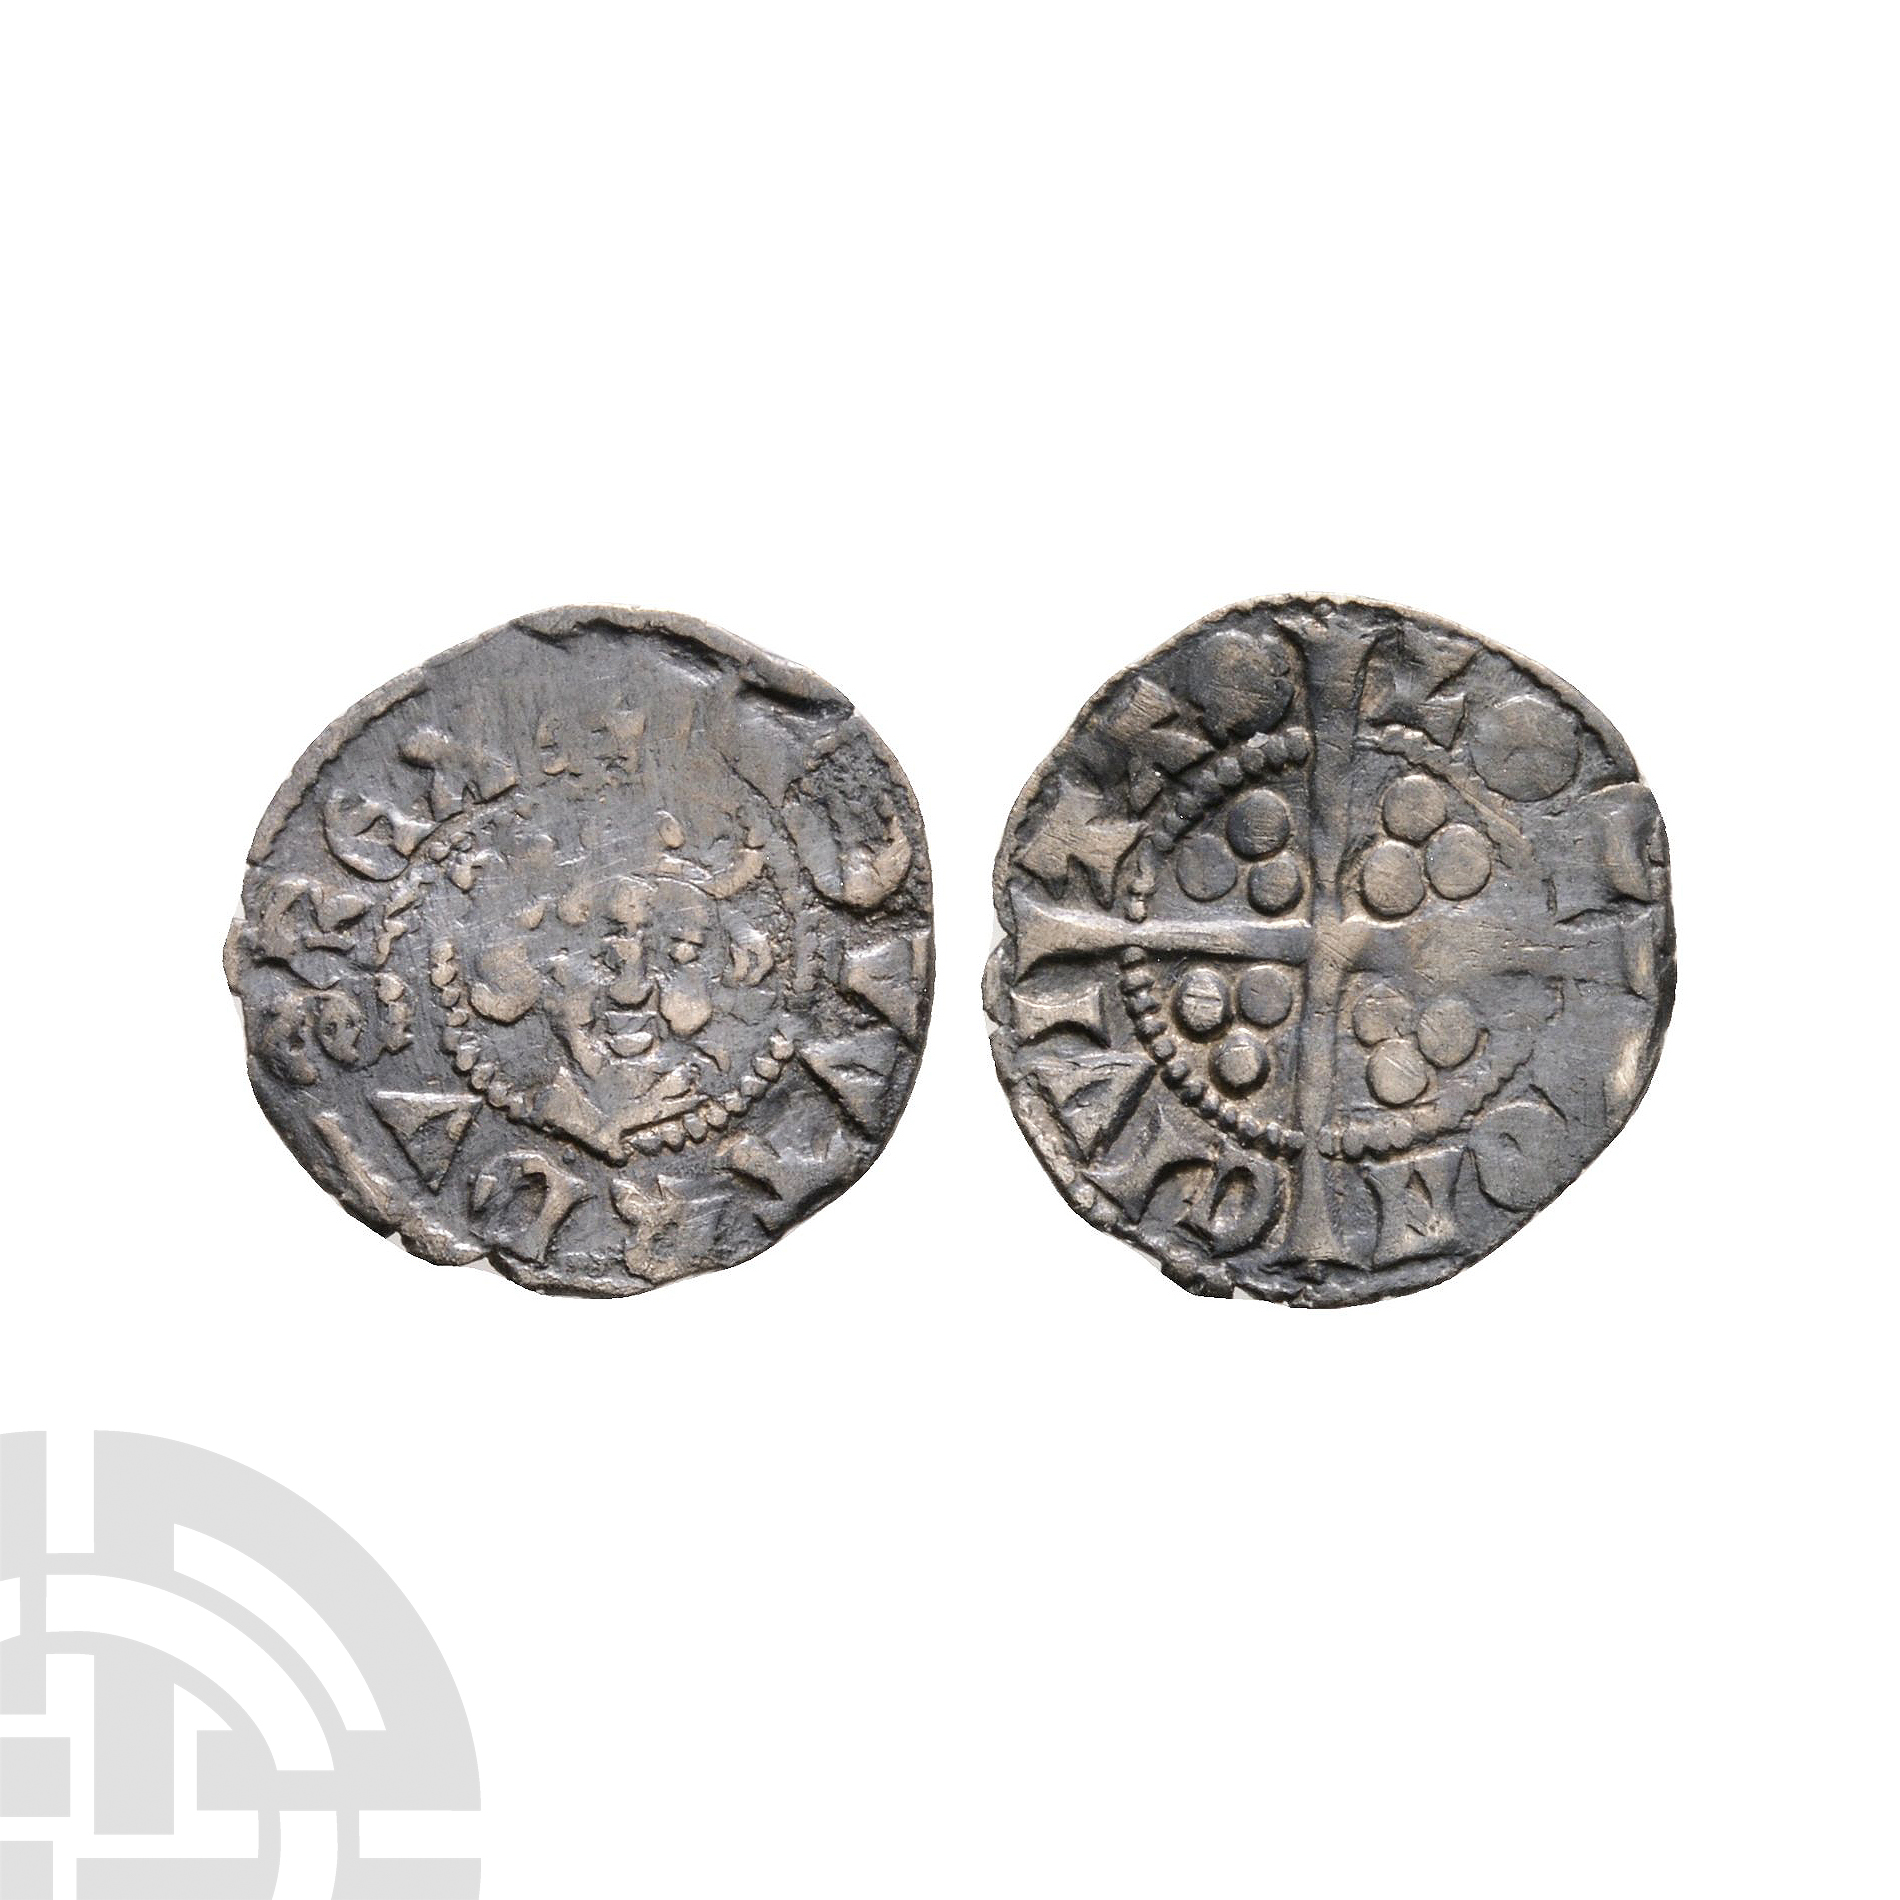 English Medieval Coins - Edward I - London - Long Cross Farthing